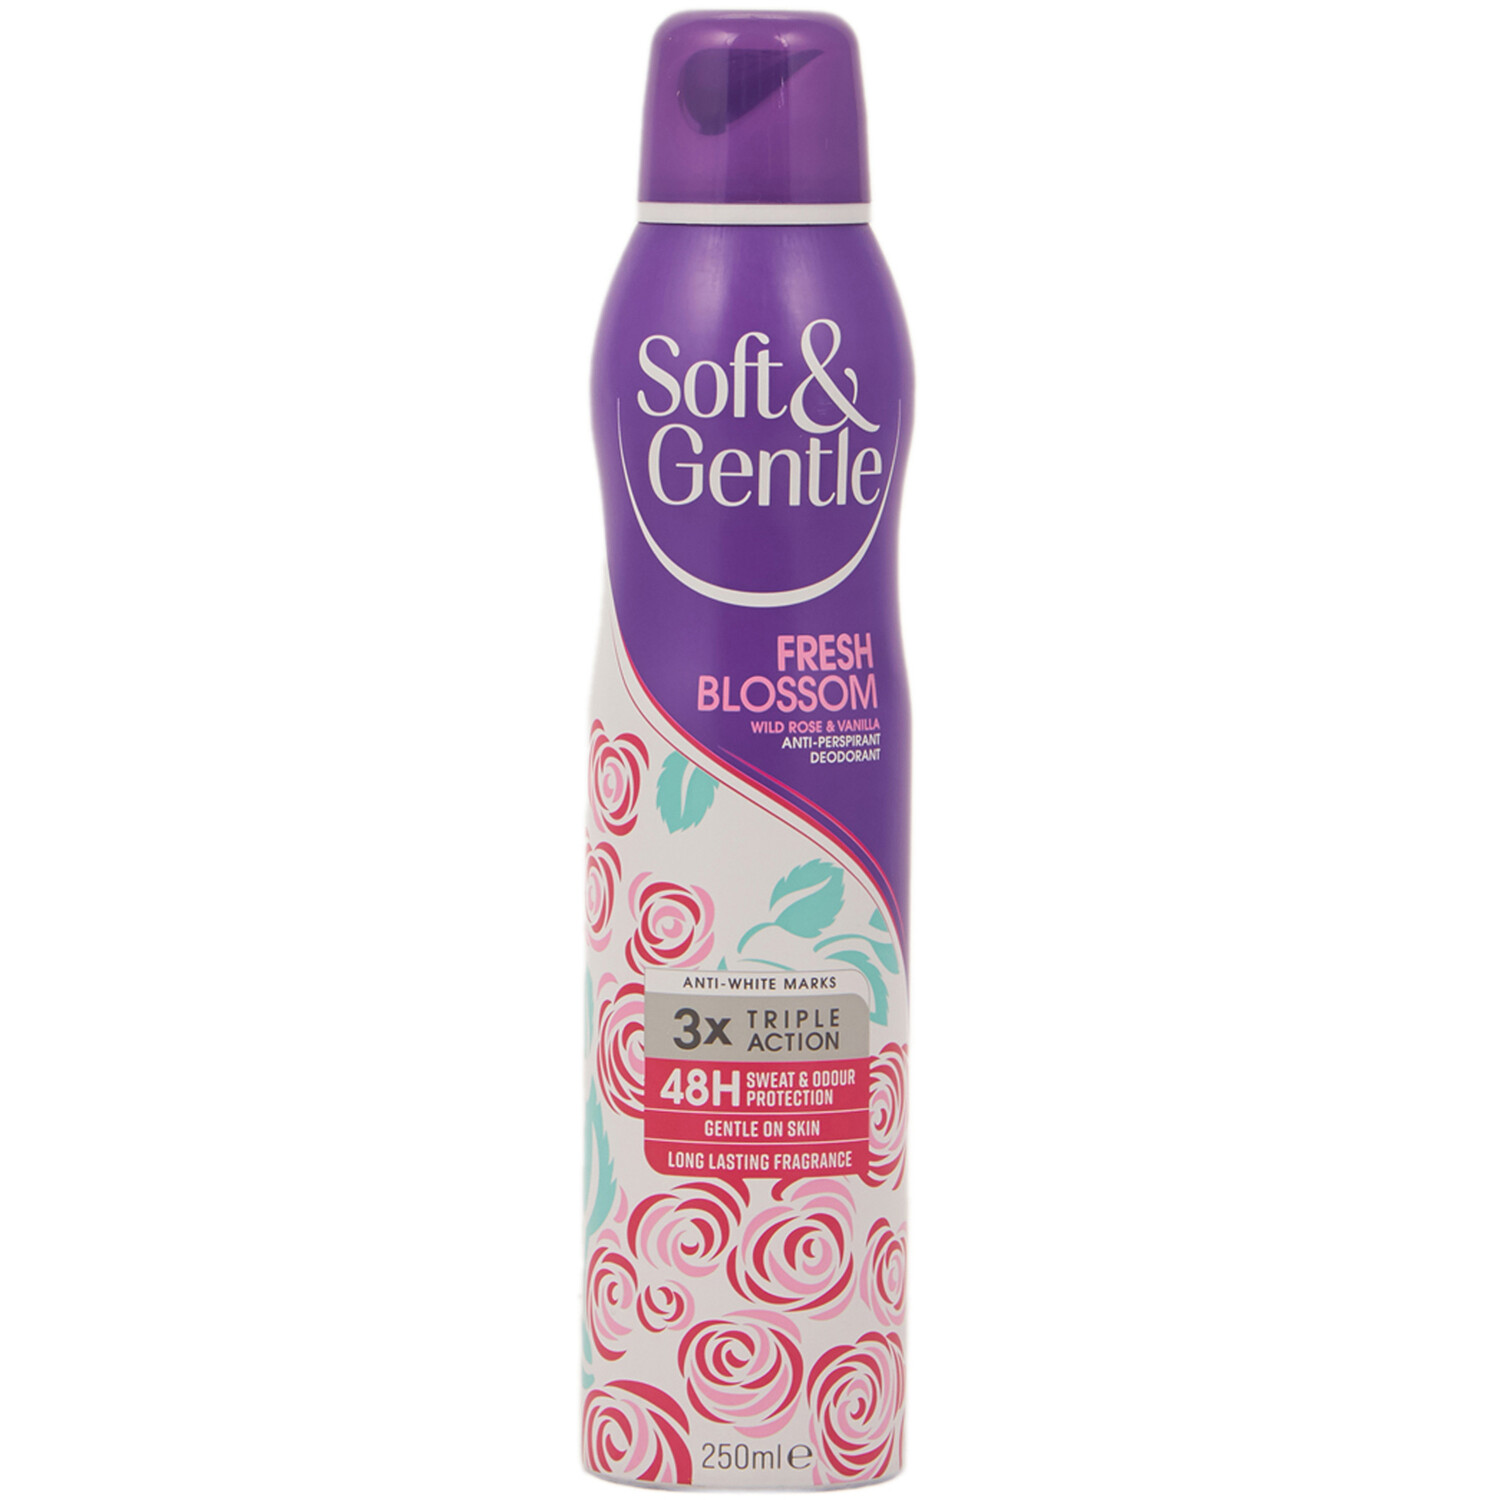 Soft & Gentle Fresh Blossom Anti-Perspirant Deodorant Spray - Purple Image 2